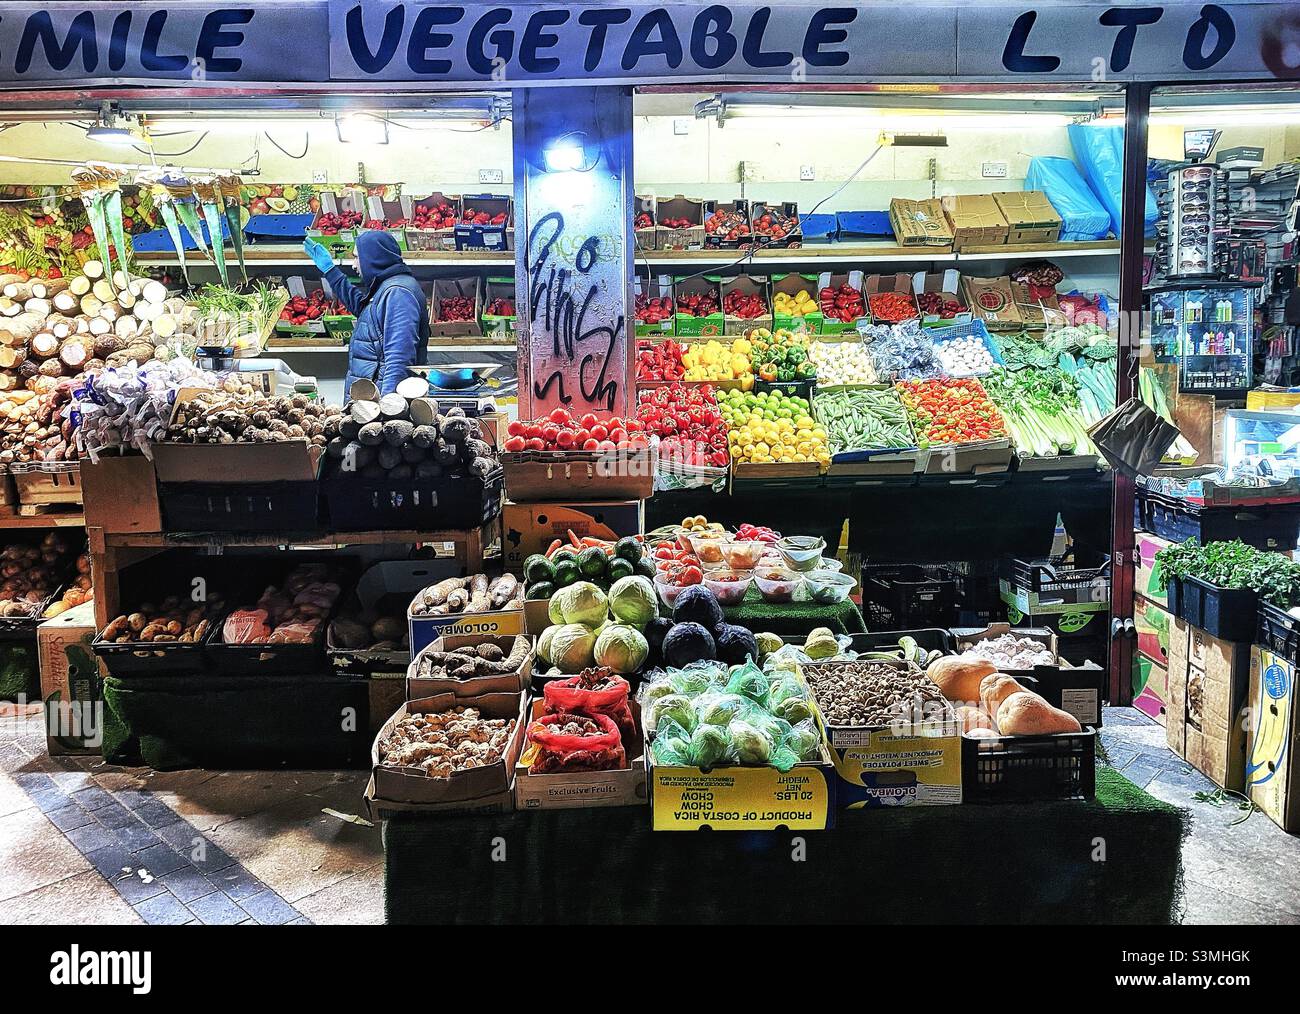 Bancarella del mercato vegetale, Peckham South London. Foto Stock